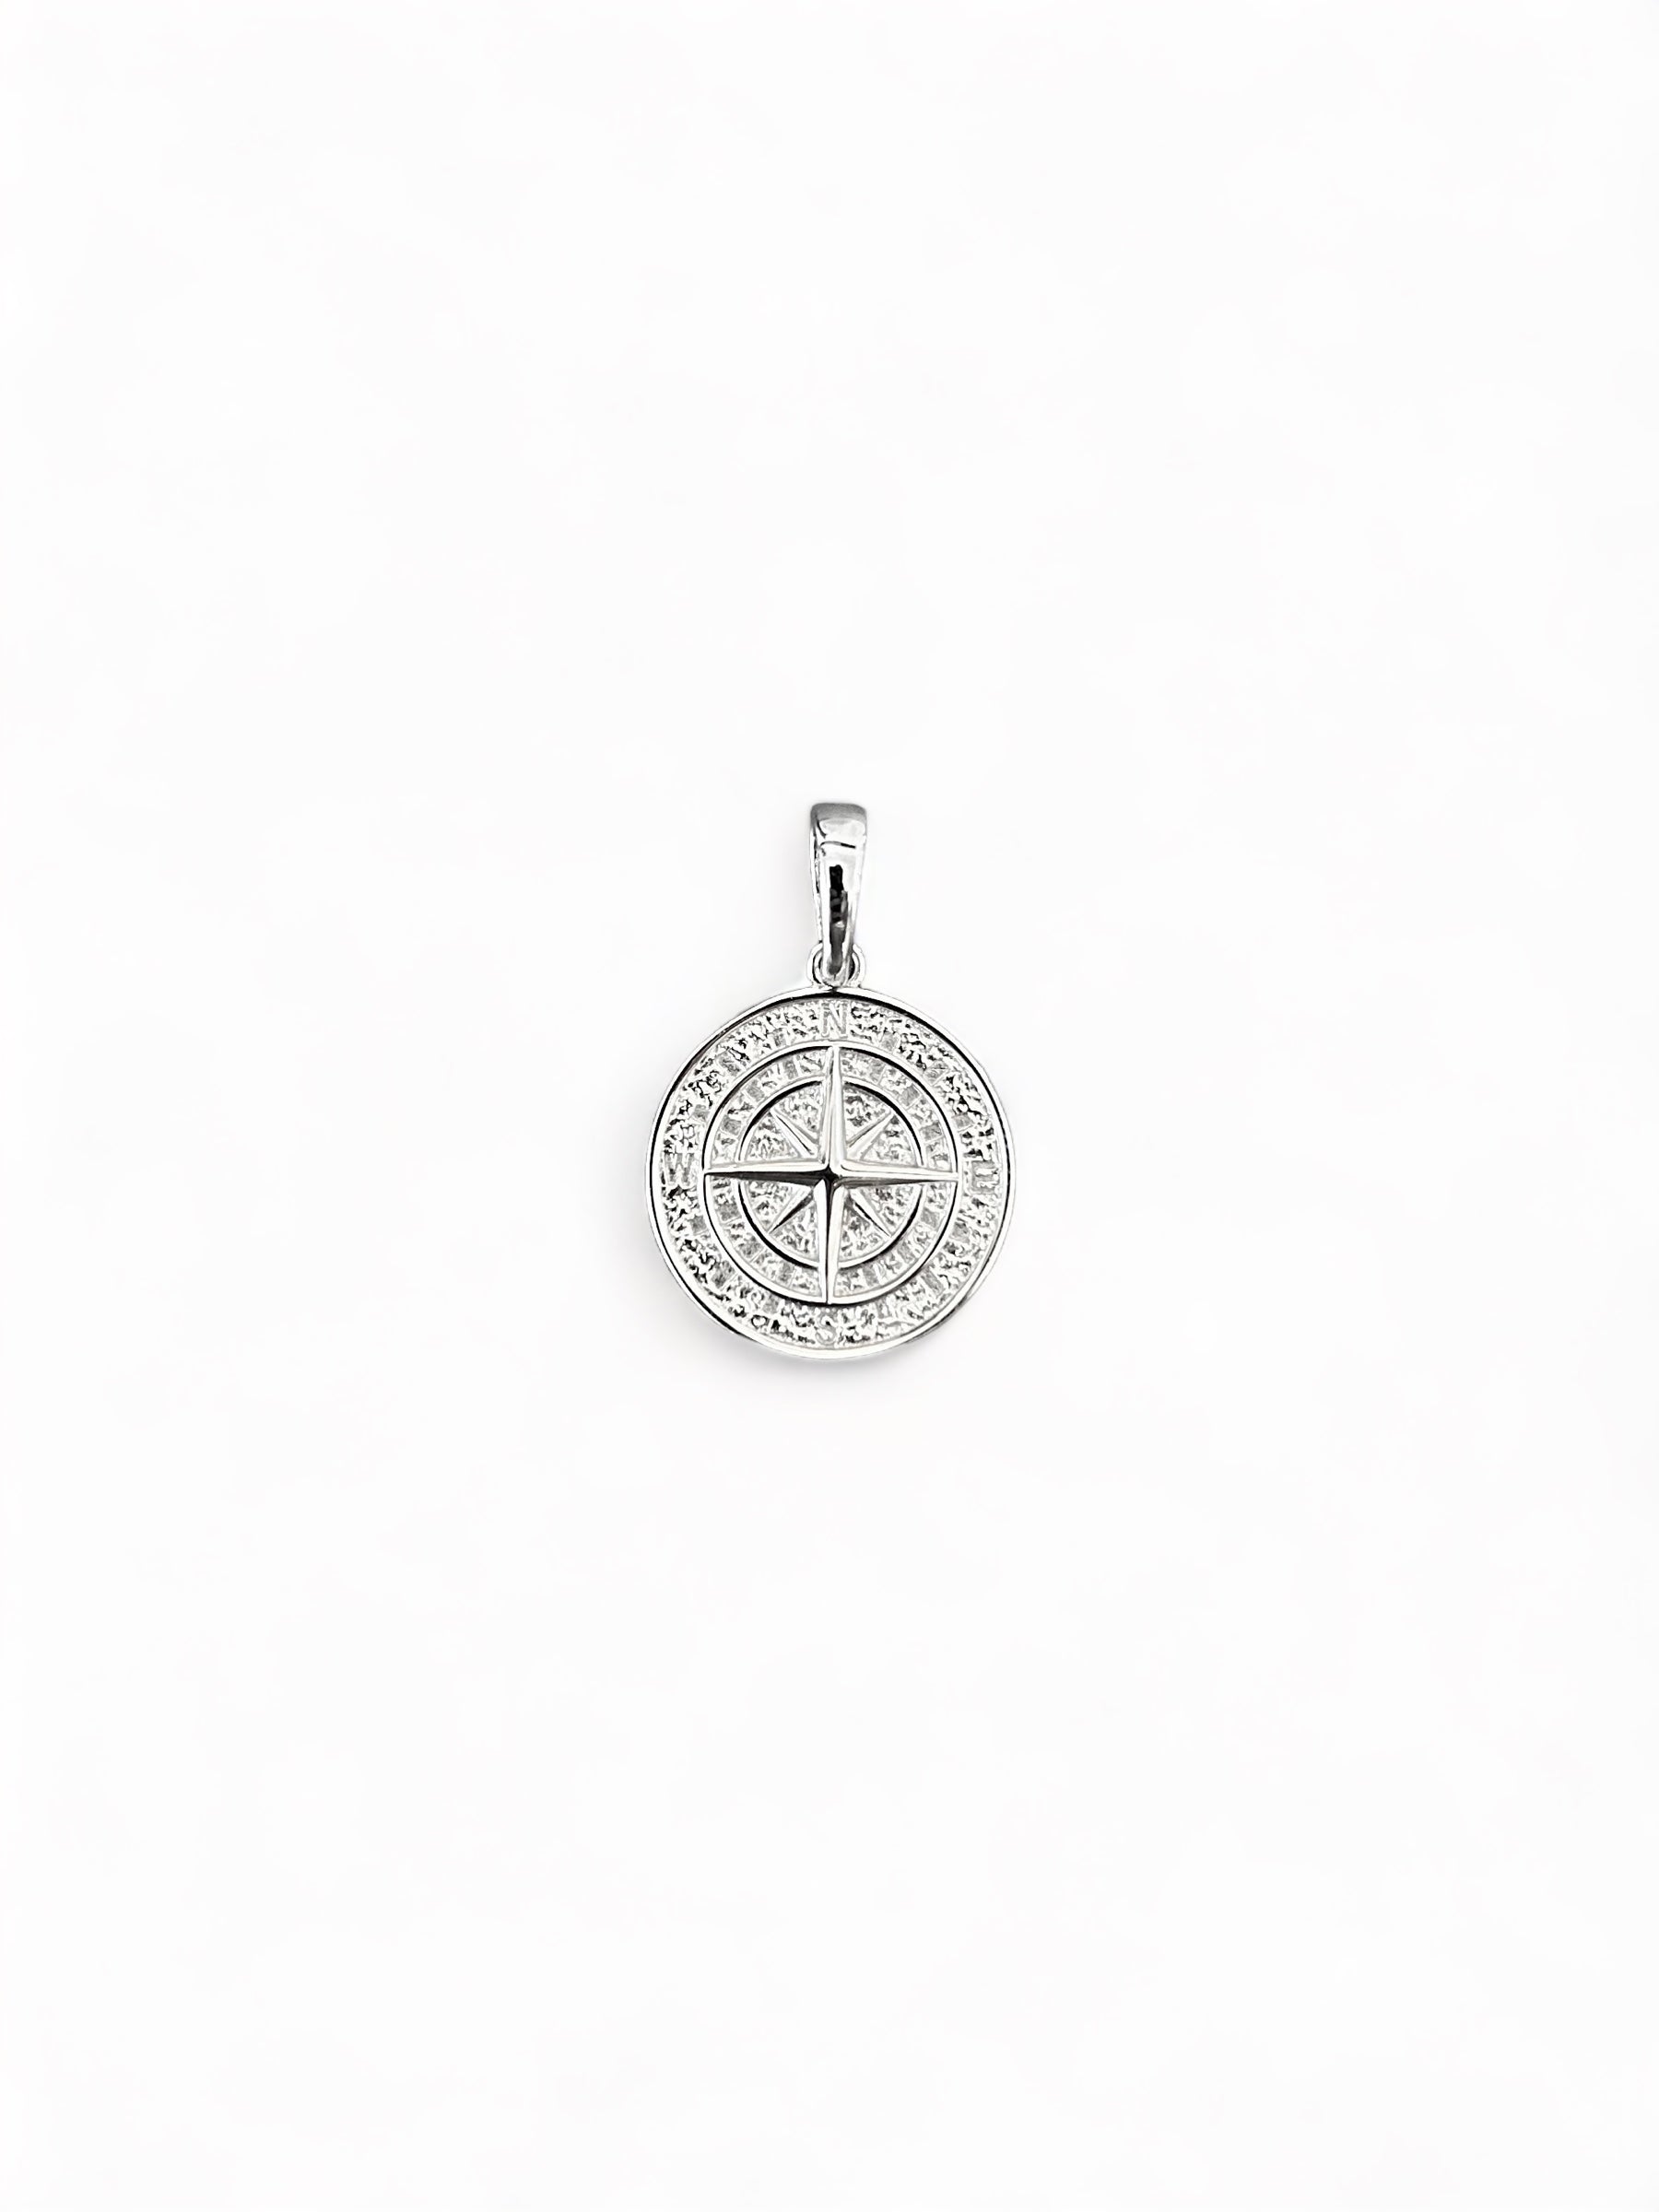 Compass pendant - 925 silver